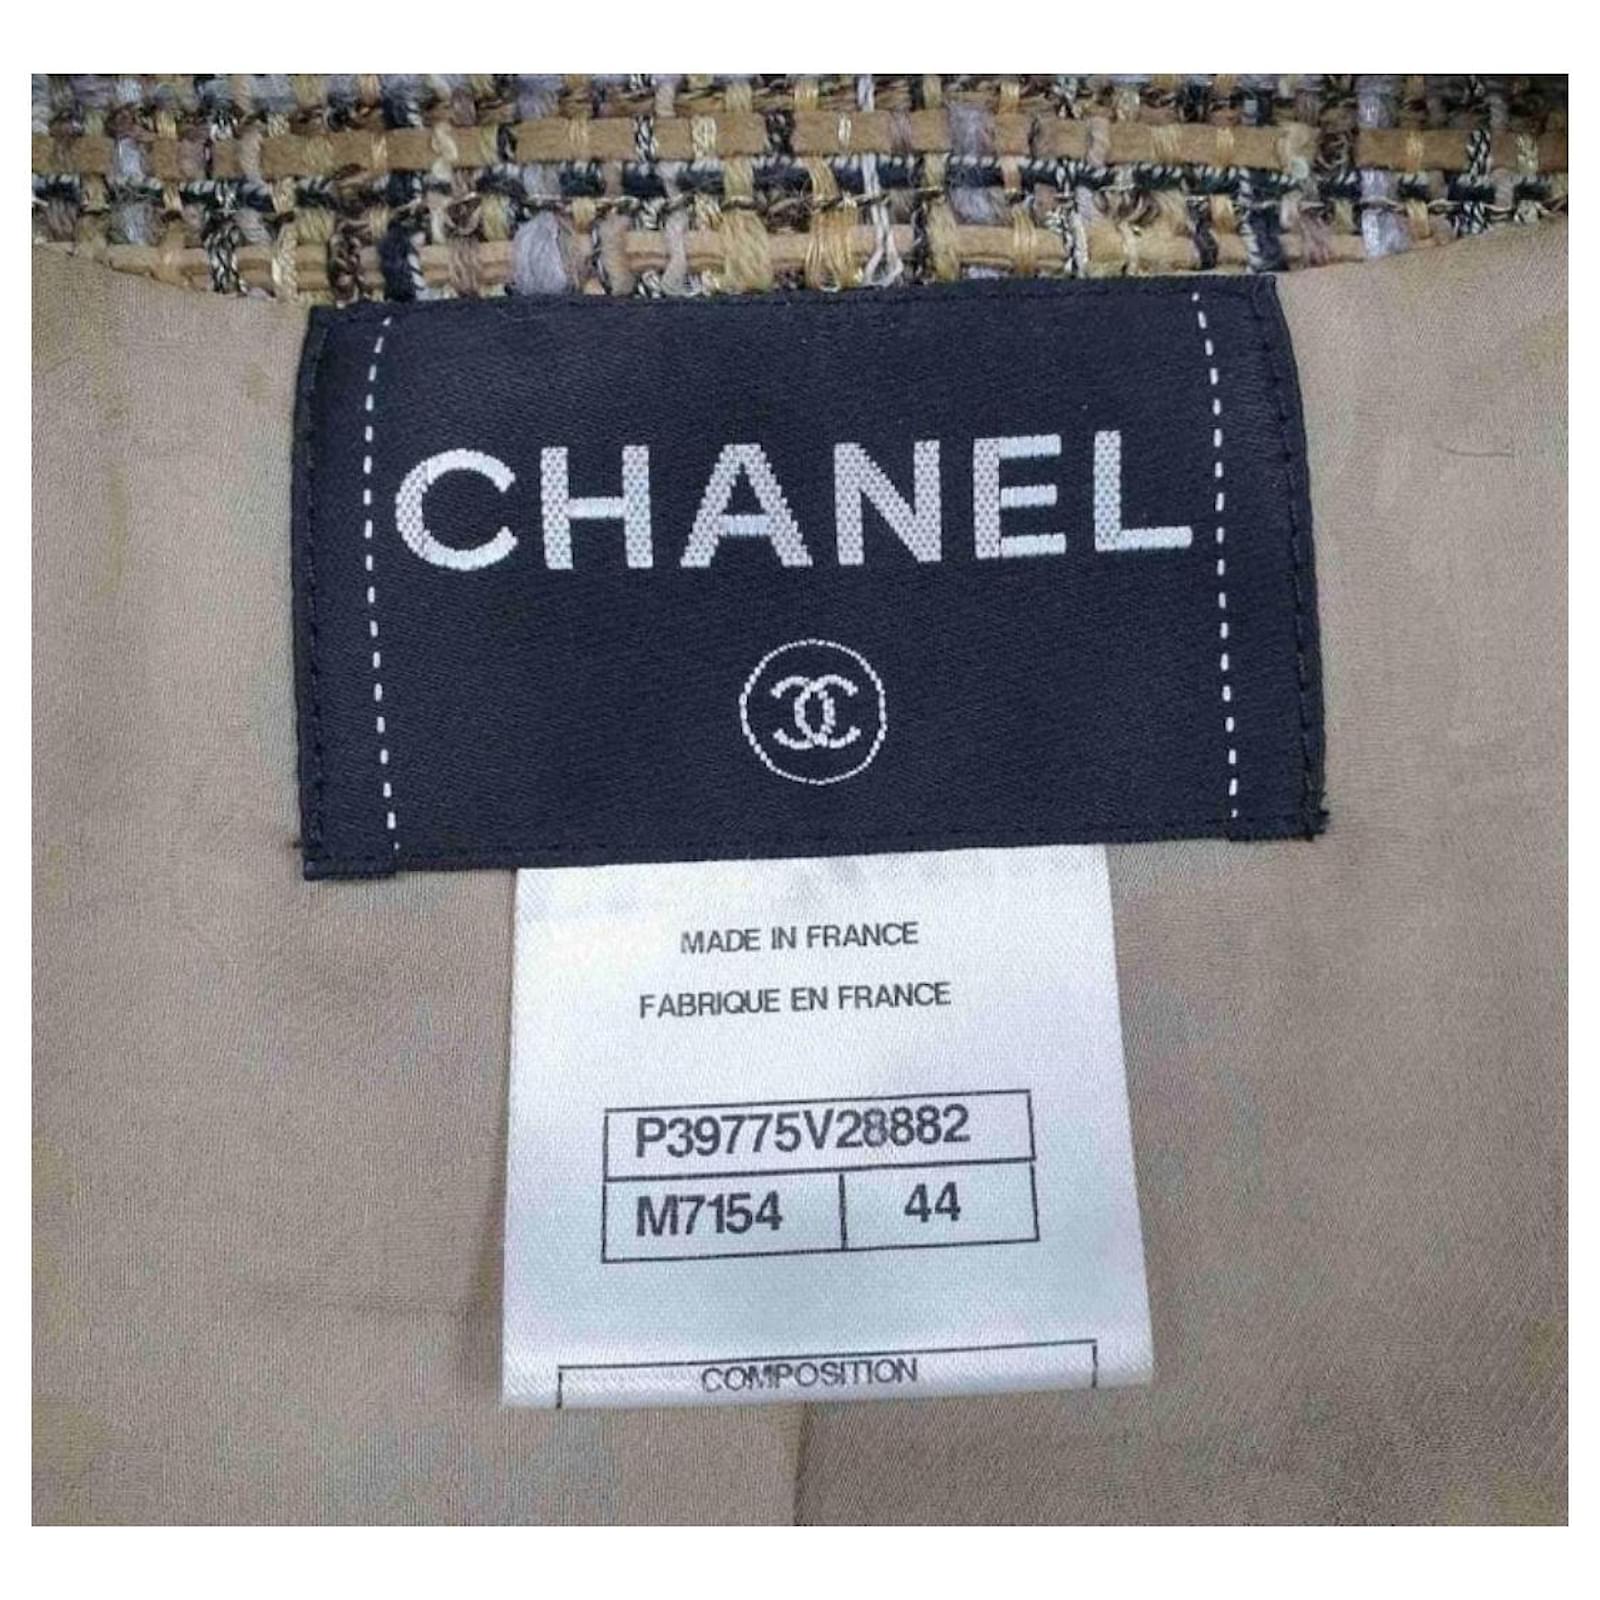 Chanel pink wool jacket - Gem